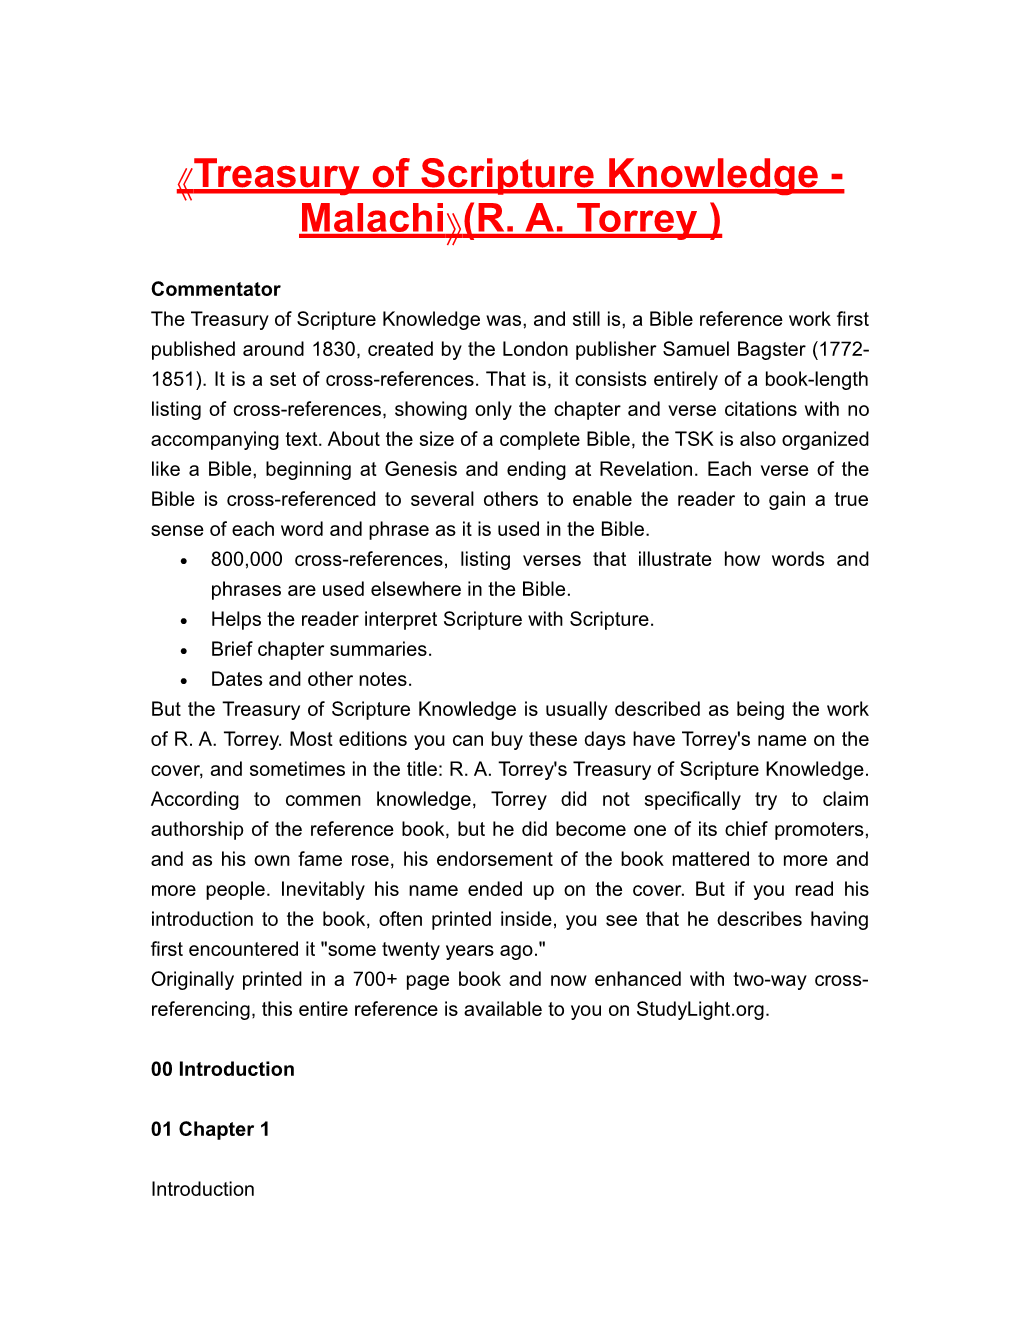 Treasuryofscriptureknowledge - Malachi (R. A.Torrey)